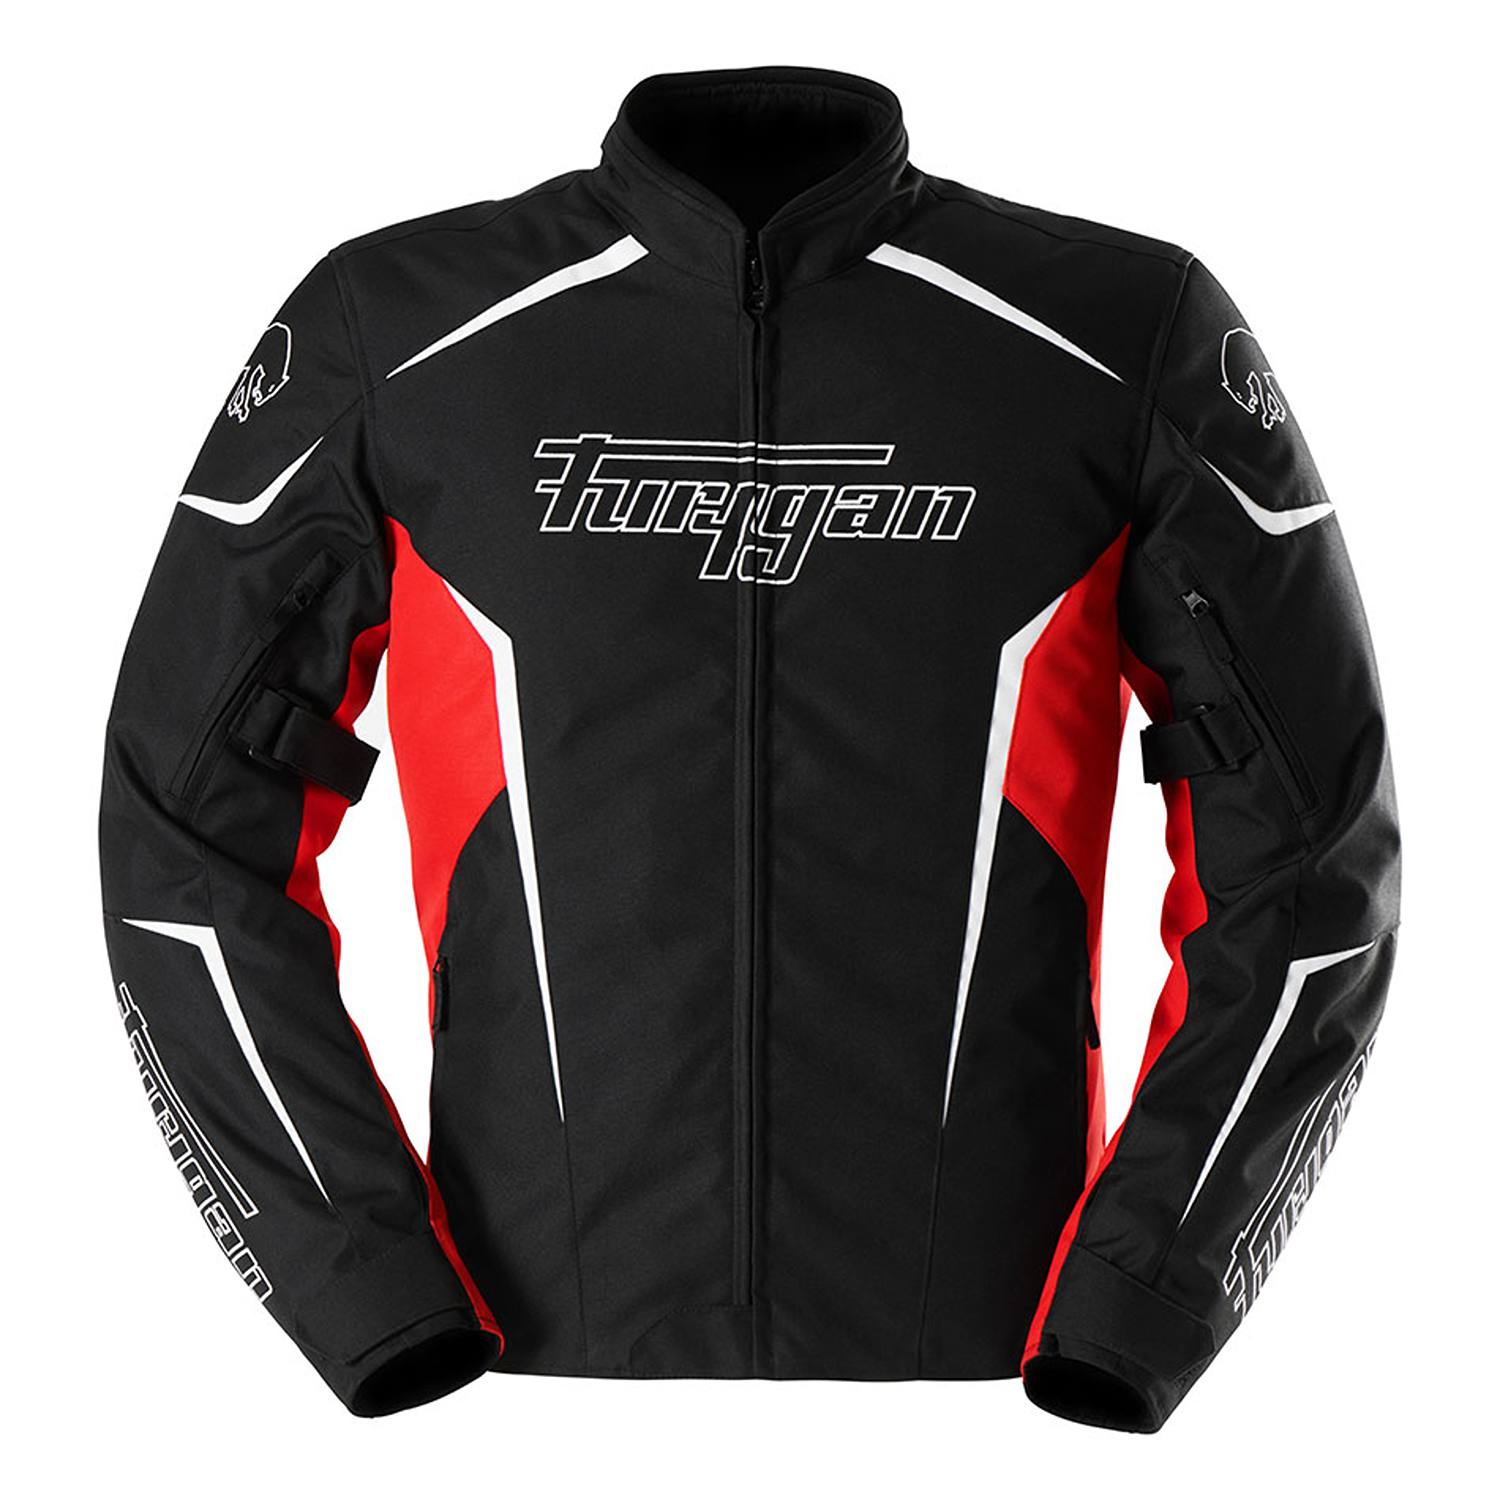 Image of Furygan Yori Jacket Black Grey Red Size S ID 3435980354657